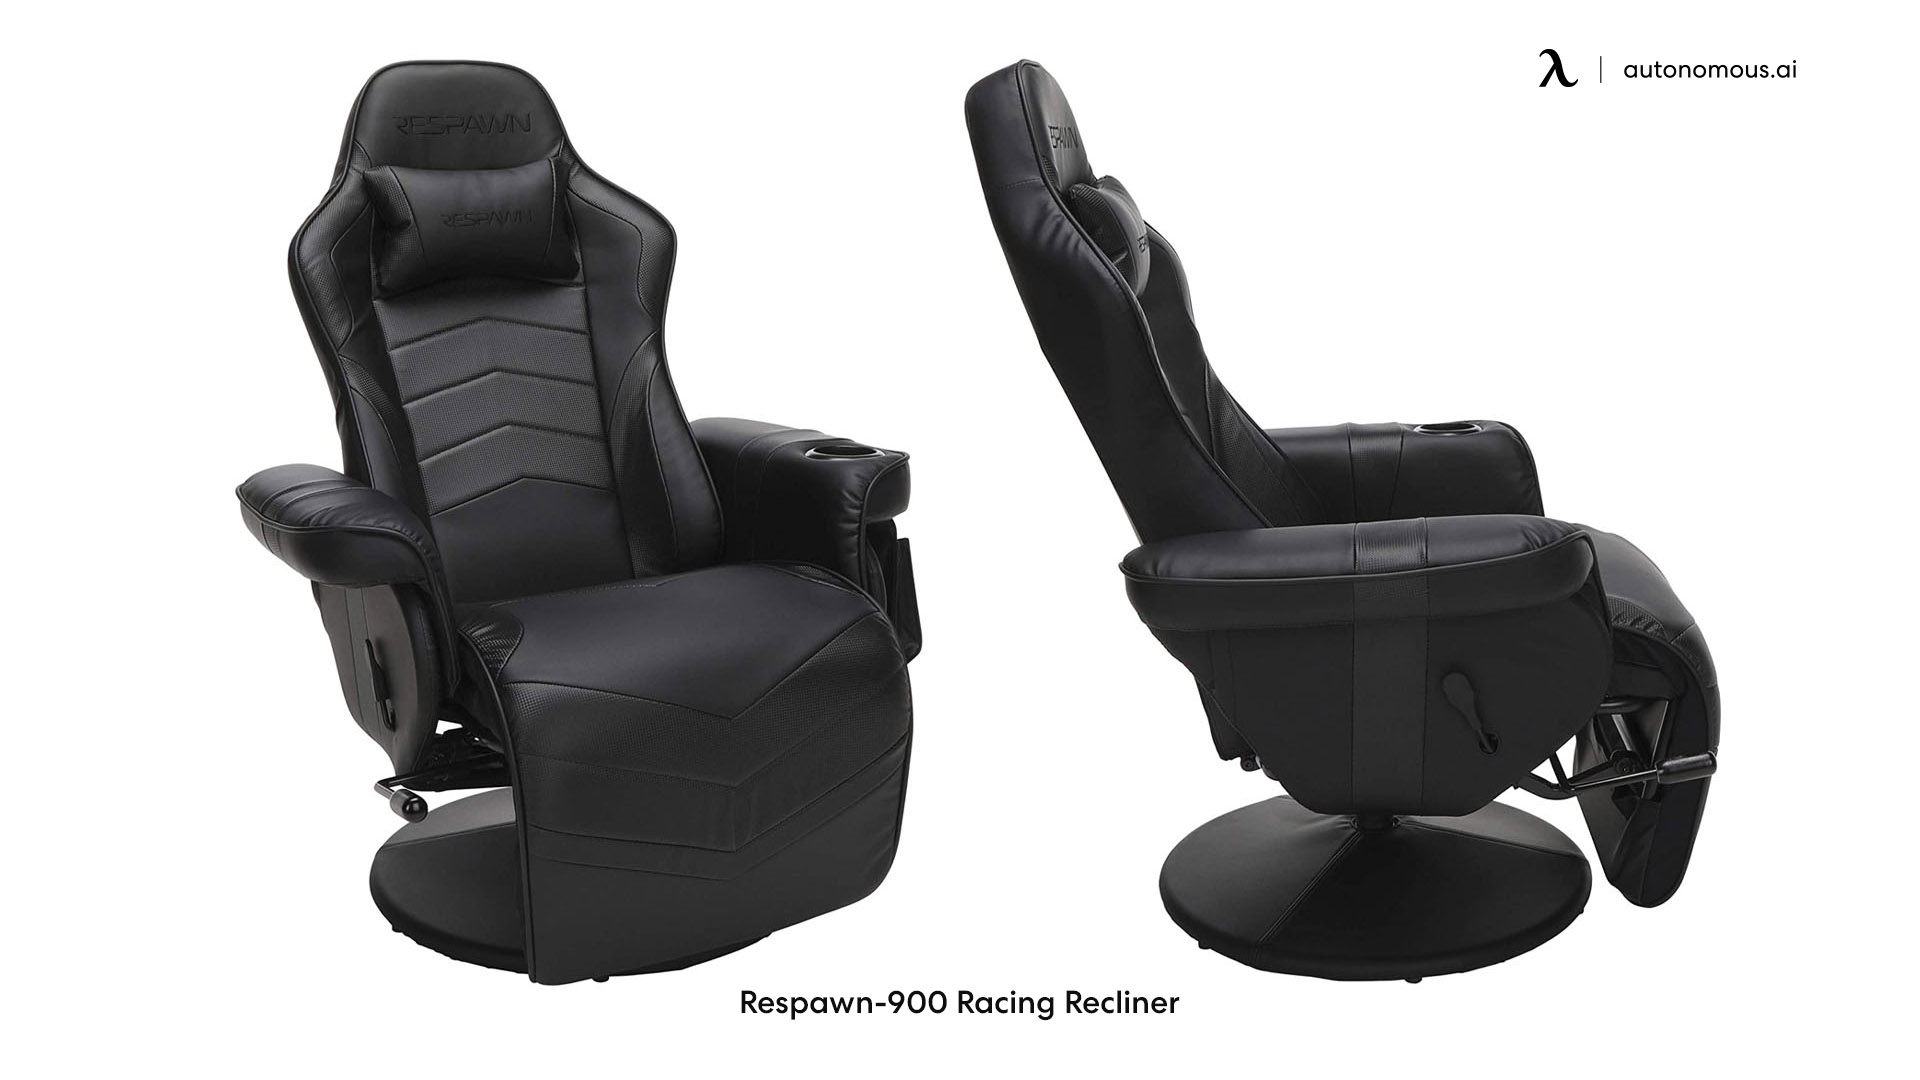 Respawn-900 Racing modern reclining chair